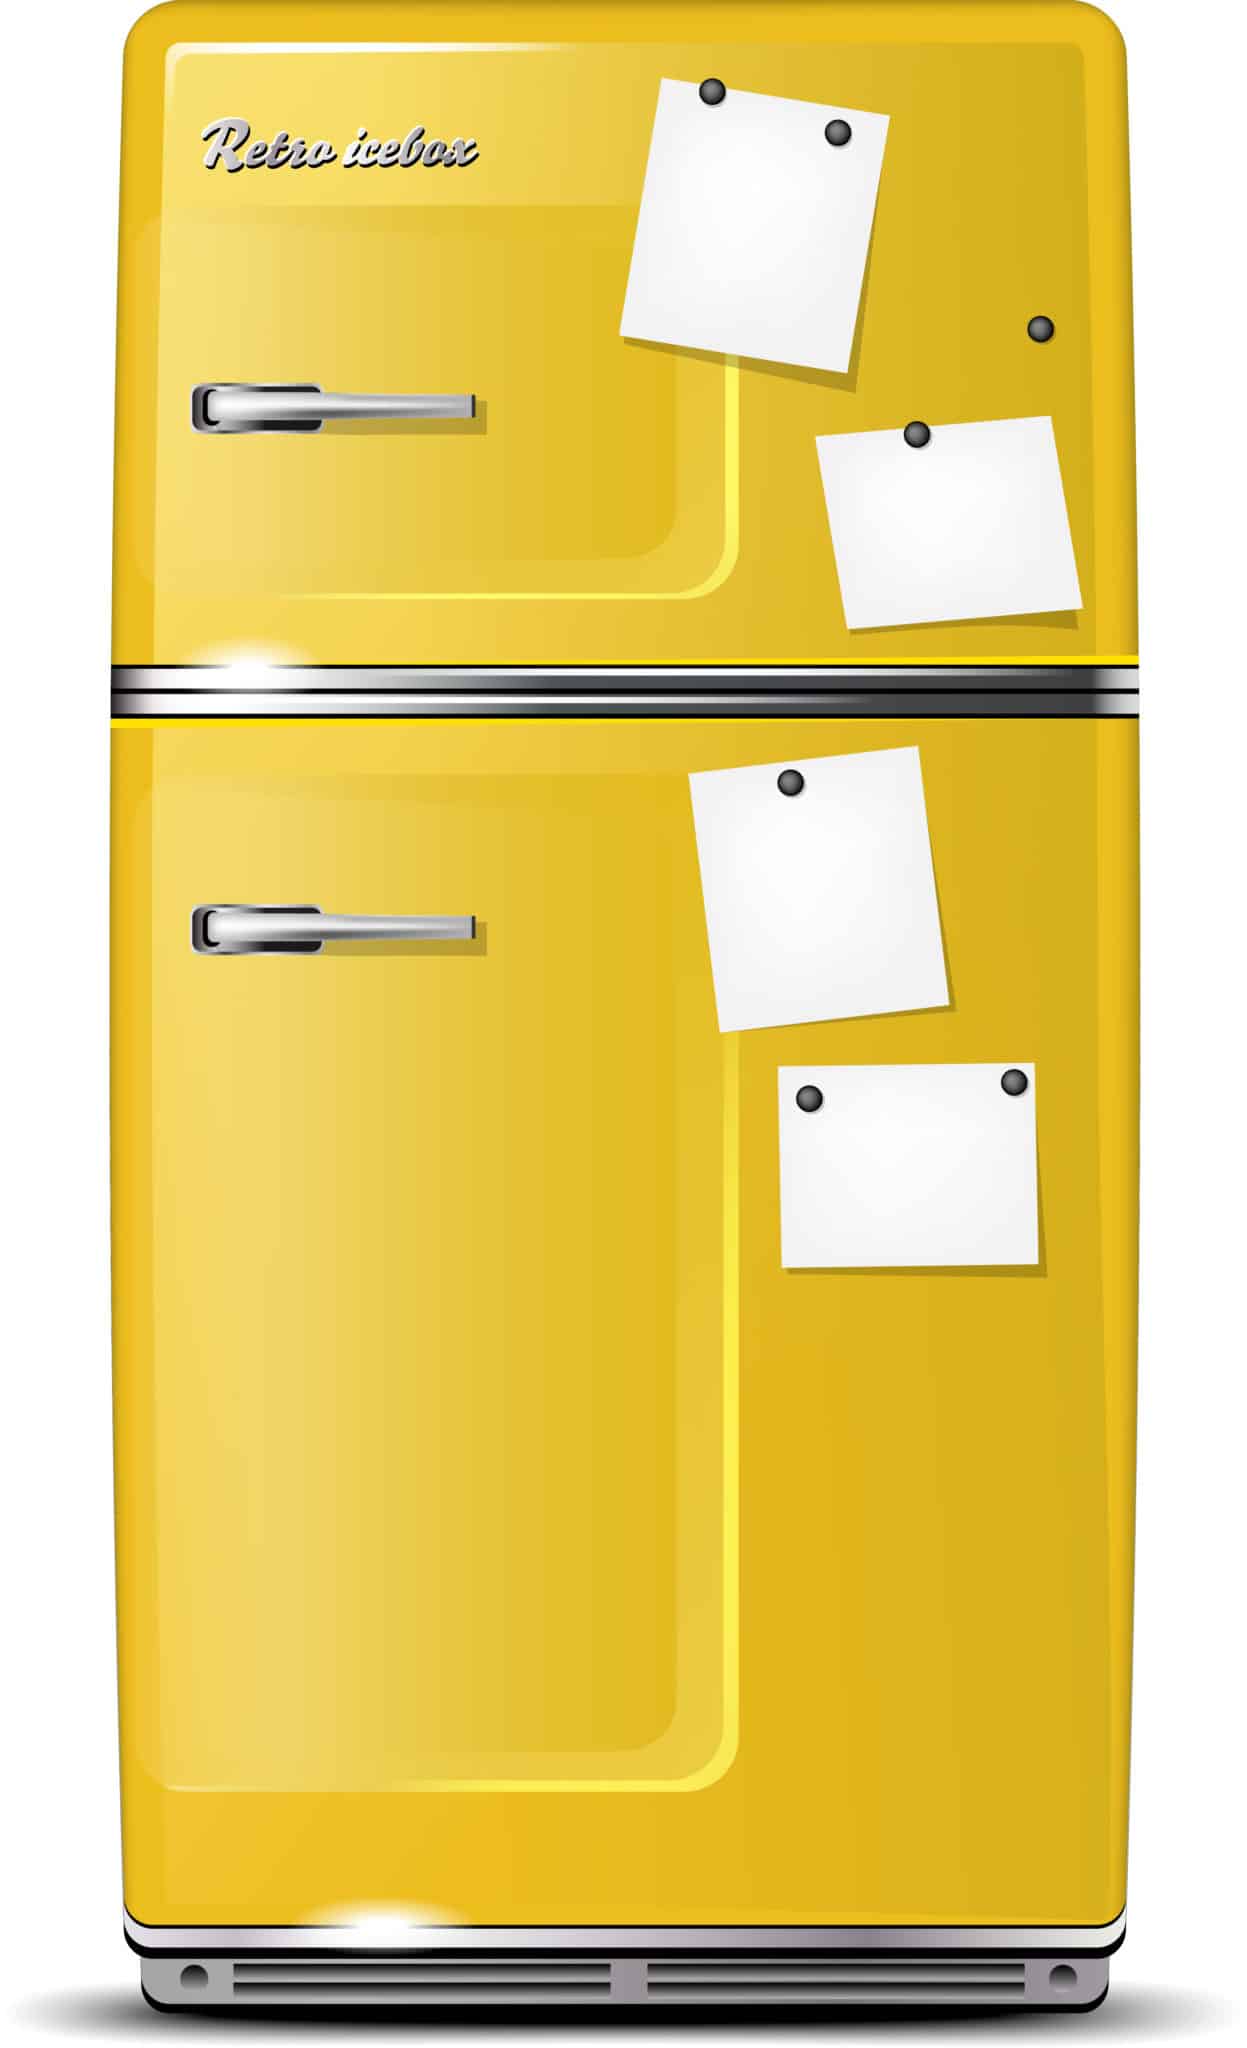 refrigerator yellow